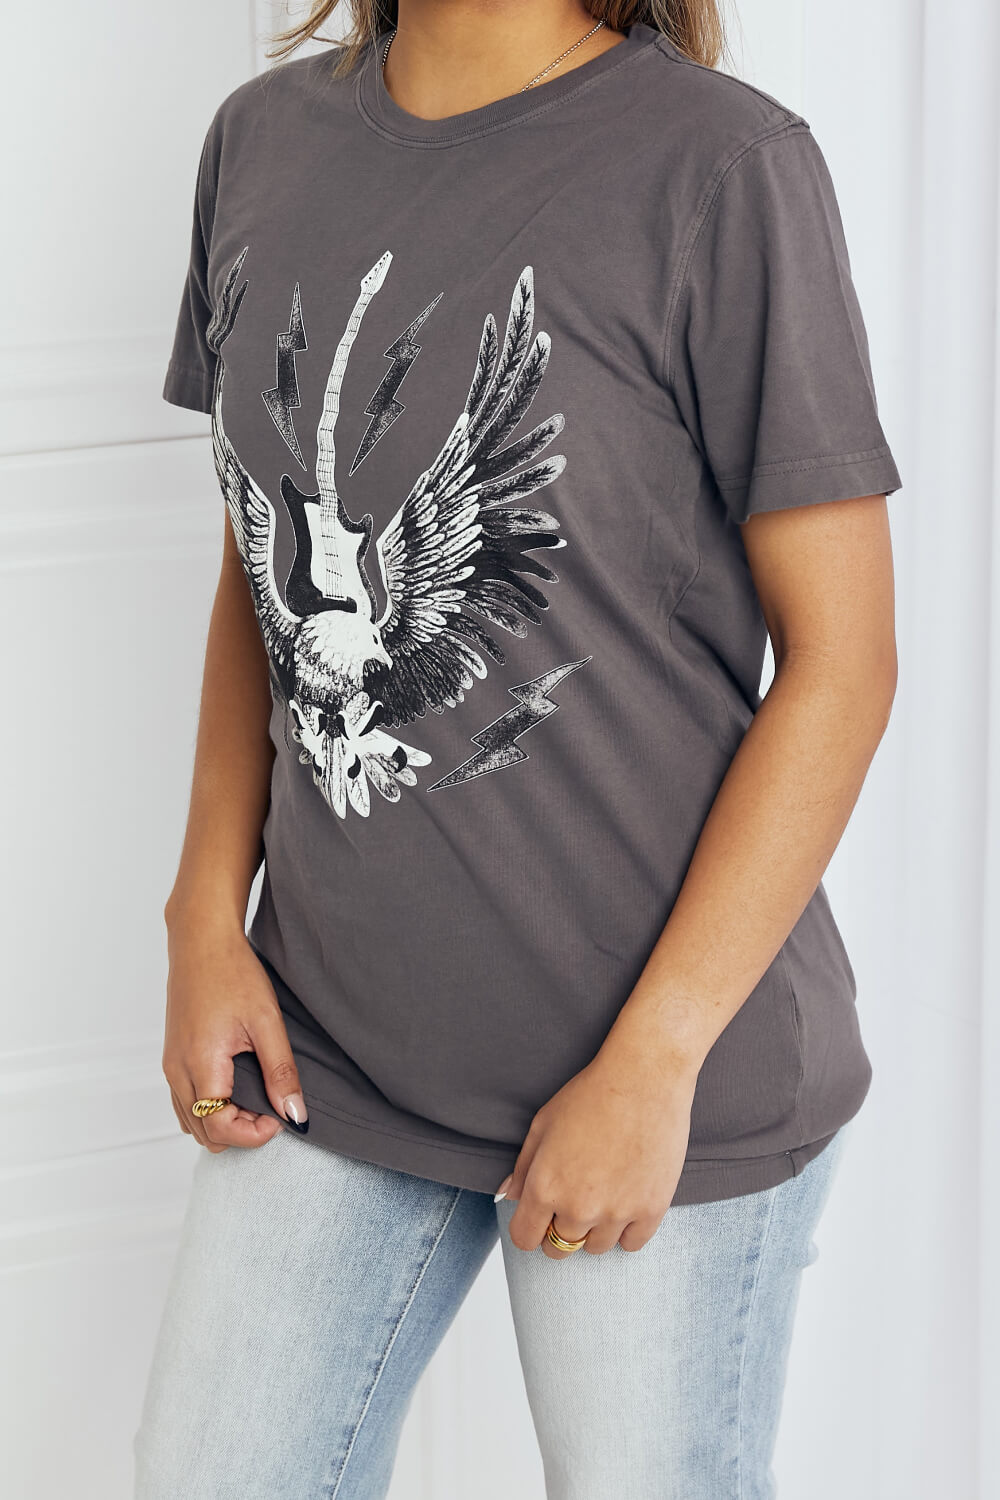 mineB Full Size Eagle Graphic Tee Shirt Sunset and Swim   